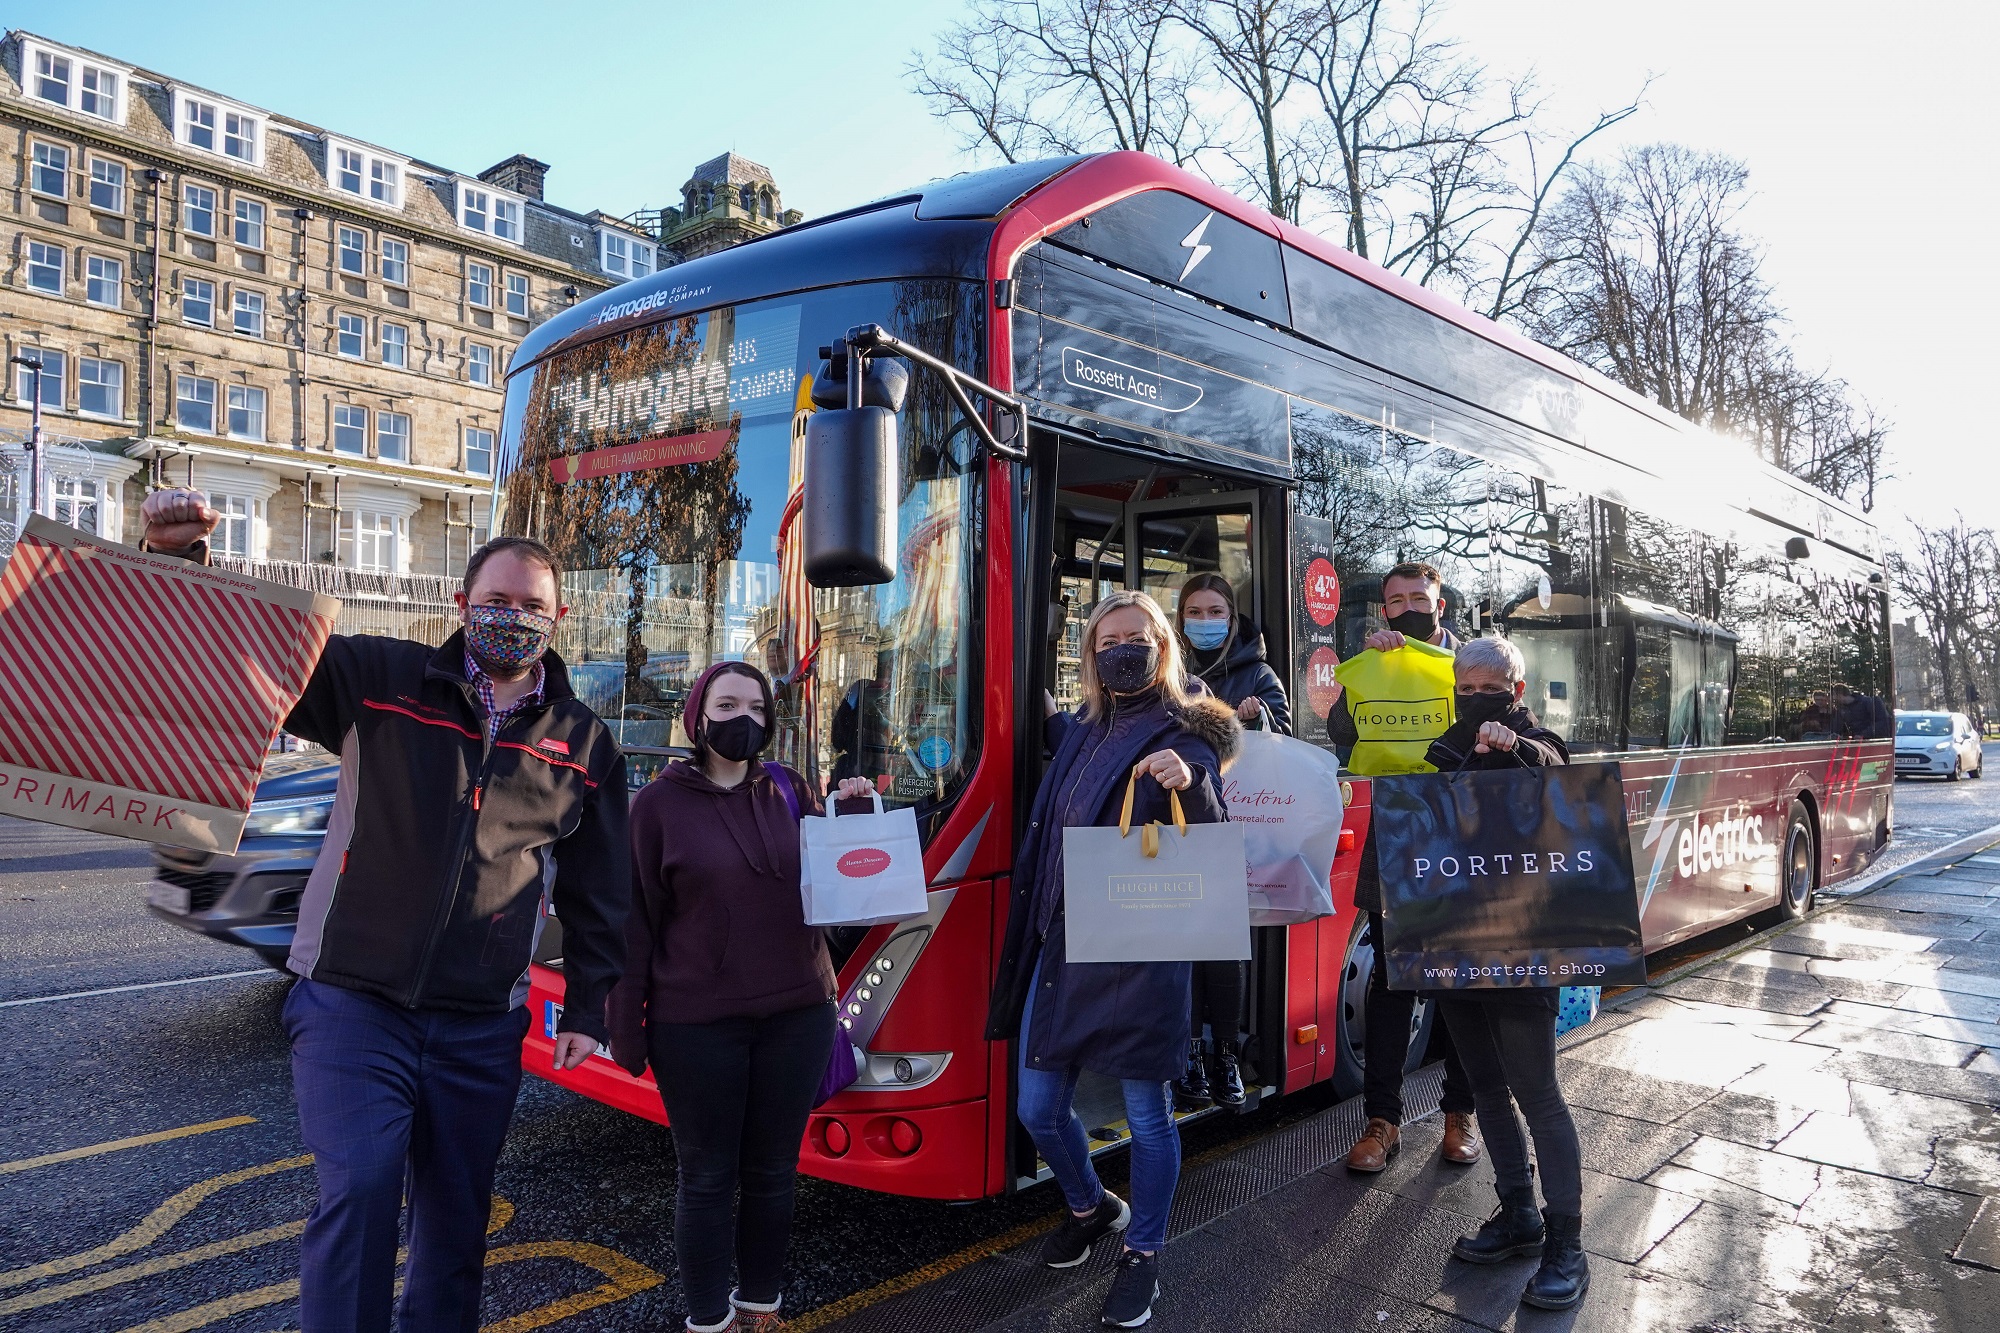 Harrogate Bus Co brings back free electric buses